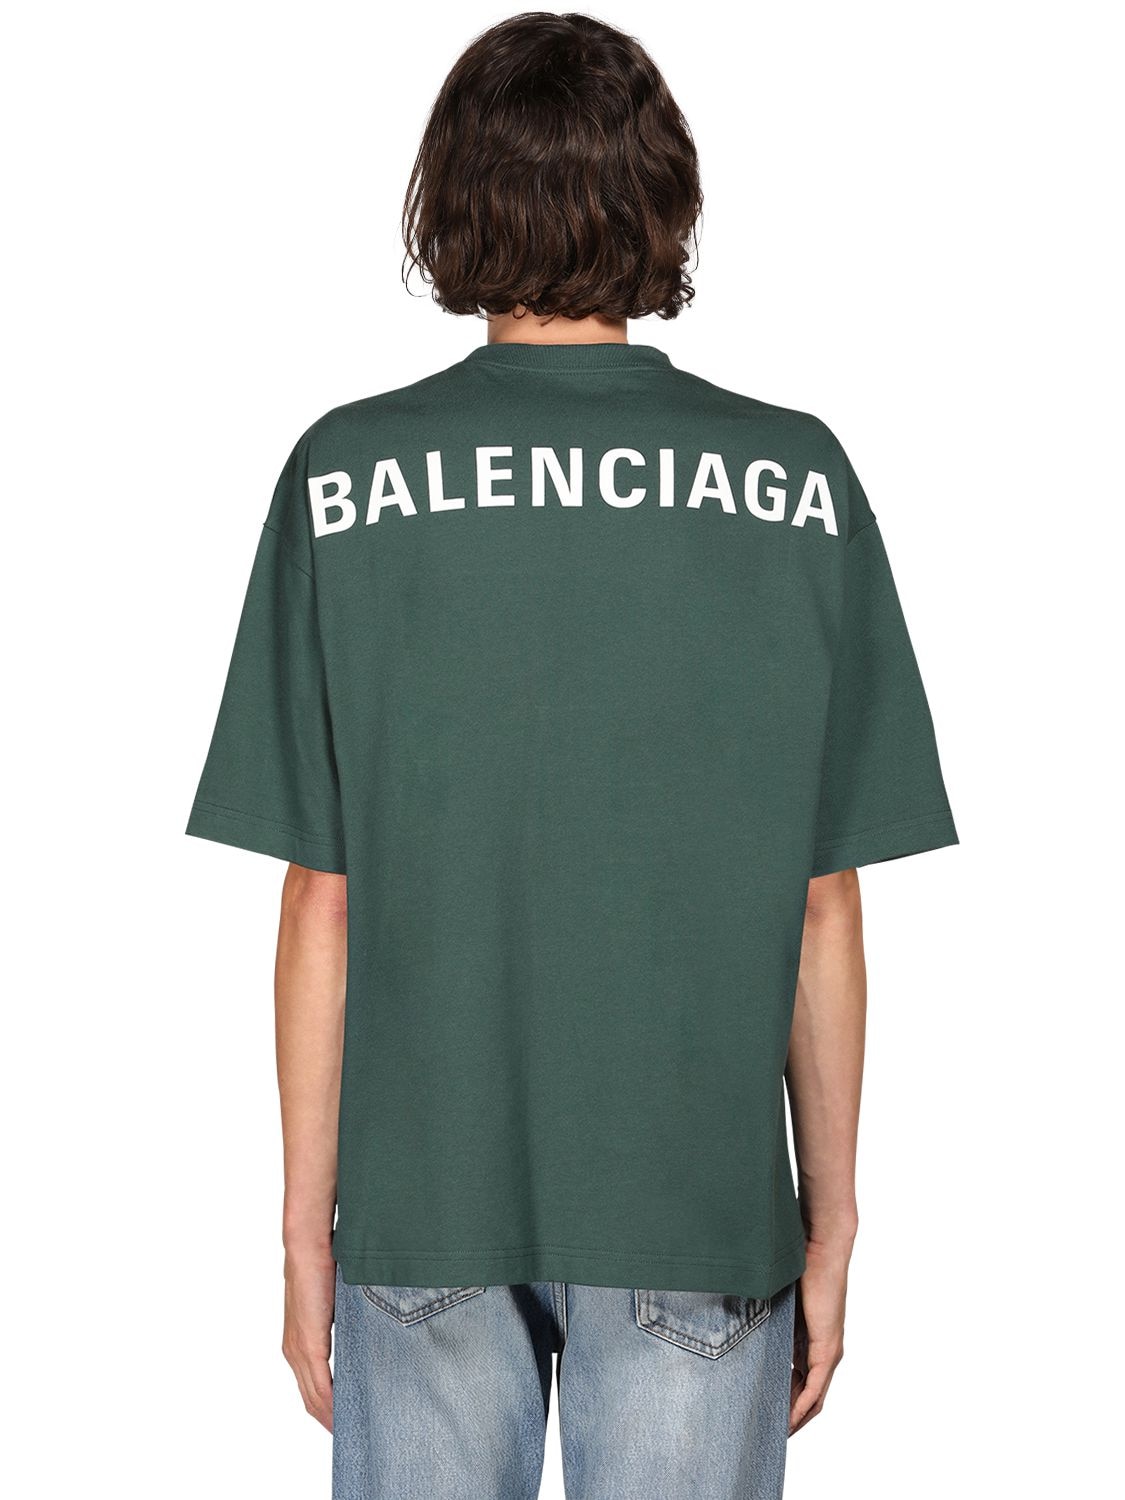 Balenciaga T Shirt Back Logo Outlet, 54% OFF | www.hcb.cat